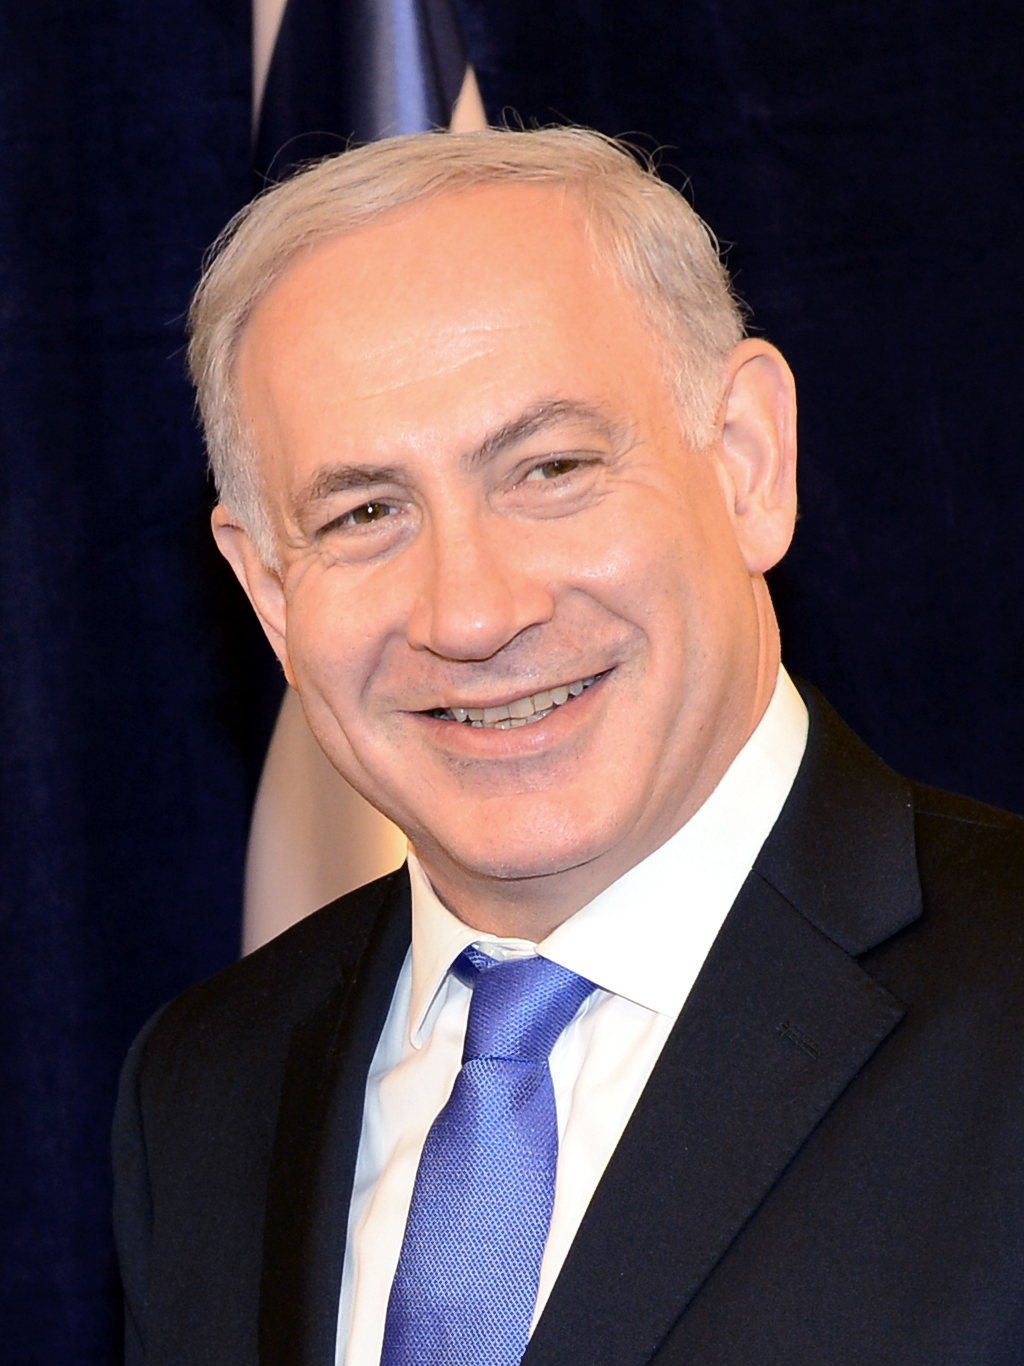 Political games begin in Israel as ek-army chief launches campaign against PM Netanyahu